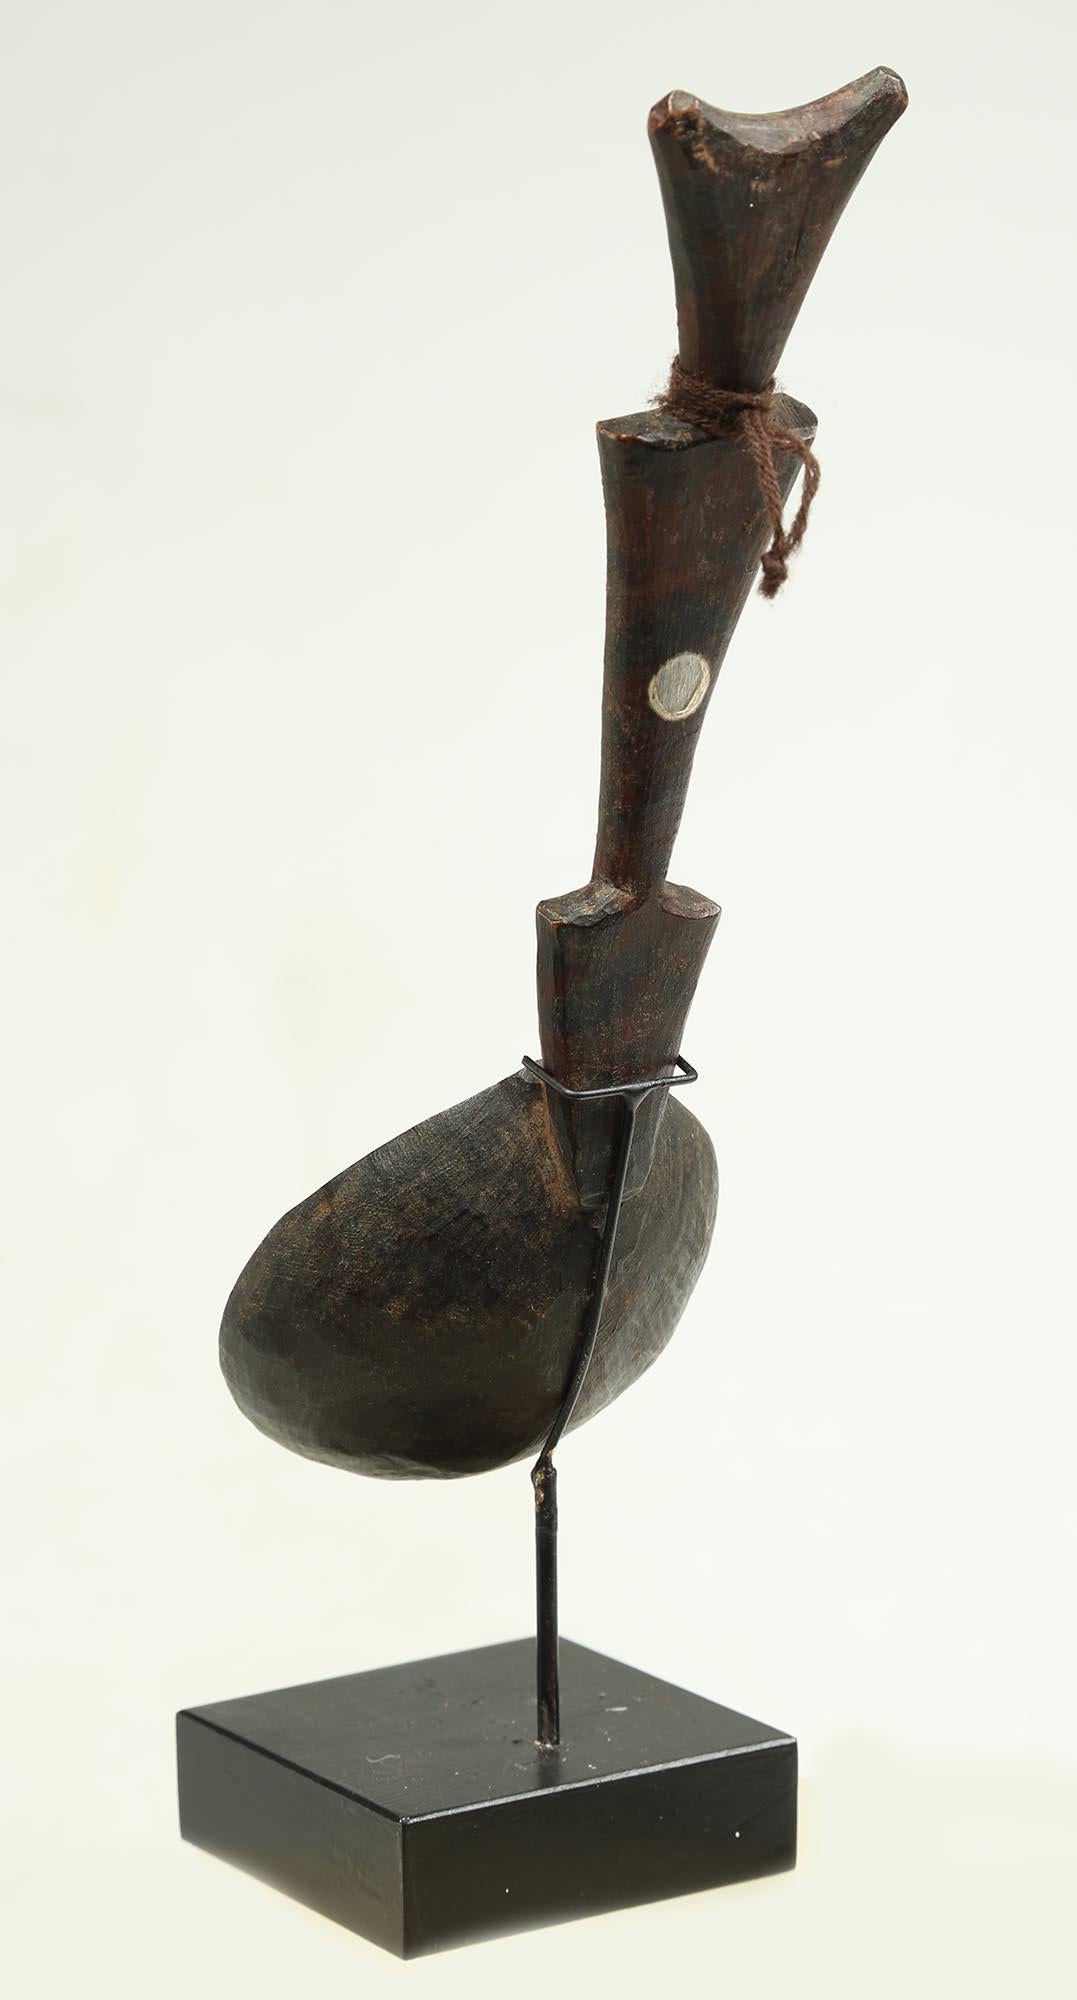 Wood Elegant Dinka Spoon with Geometric Handle, South Sudan Africa Early 20th Century